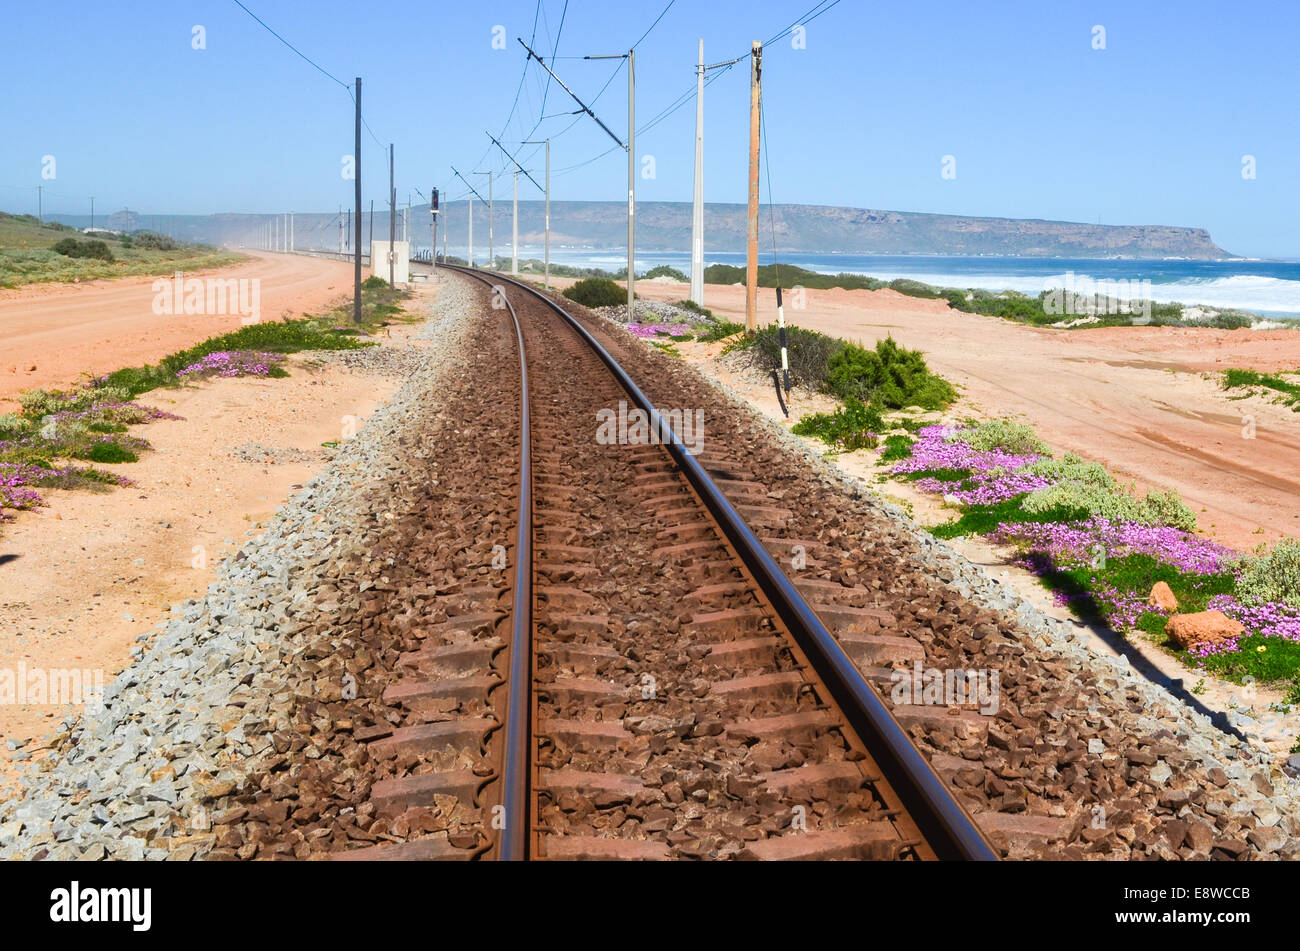 Sishen-Saldanha railway on the African West Coast in South Africa near Elandsbaai Stock Photo